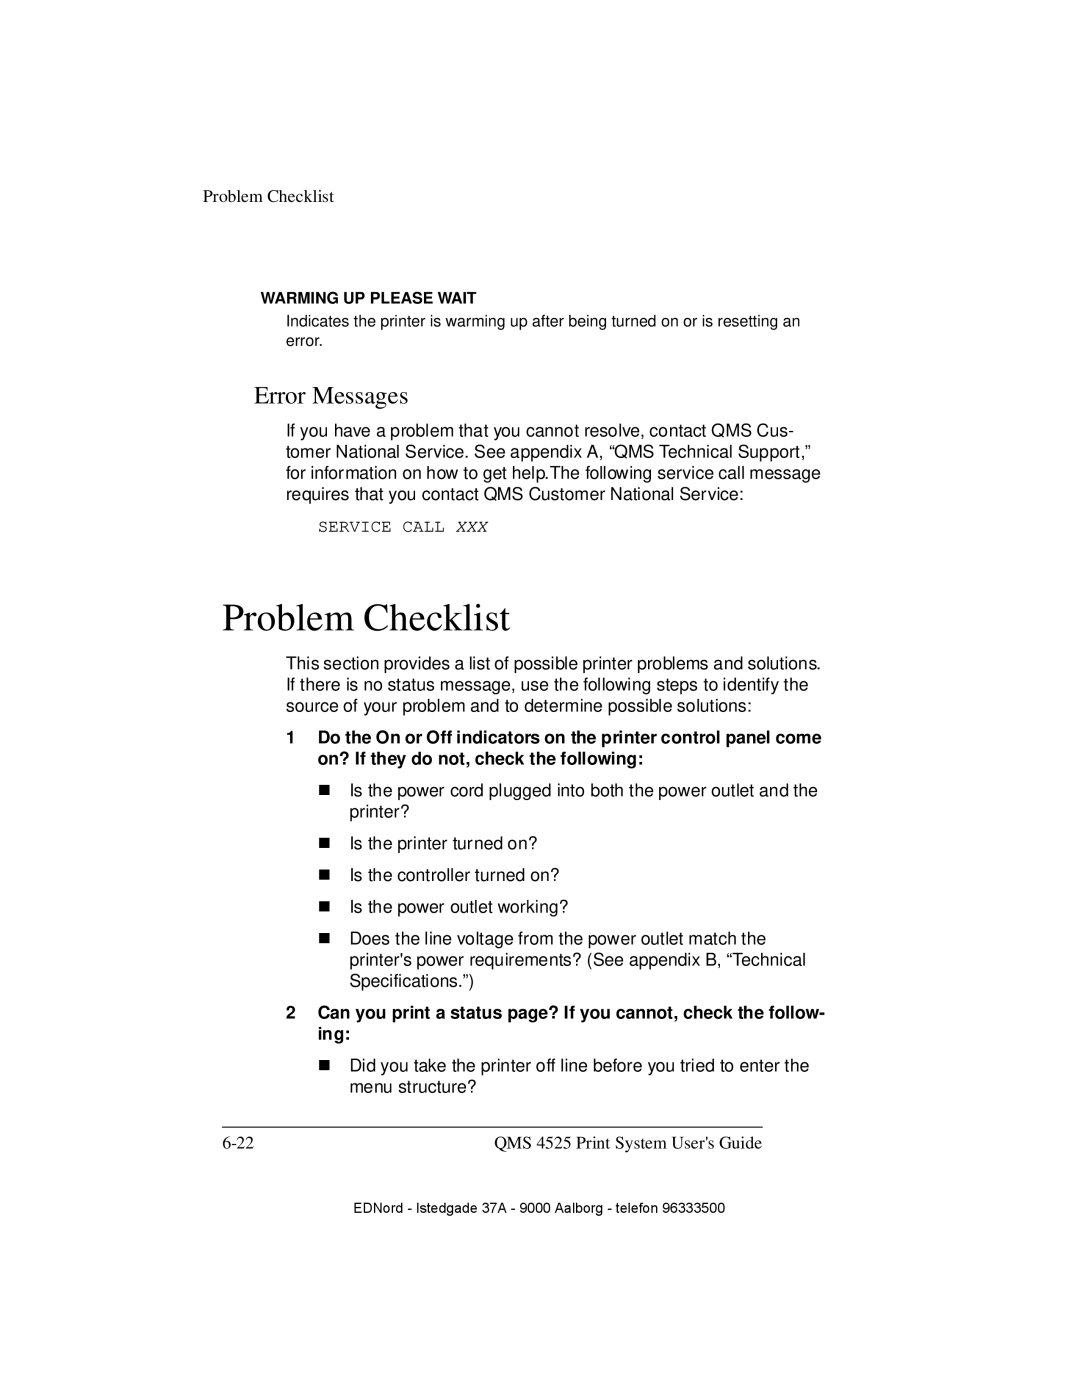 IBM QMS 4525 manual Problem Checklist, Error Messages 